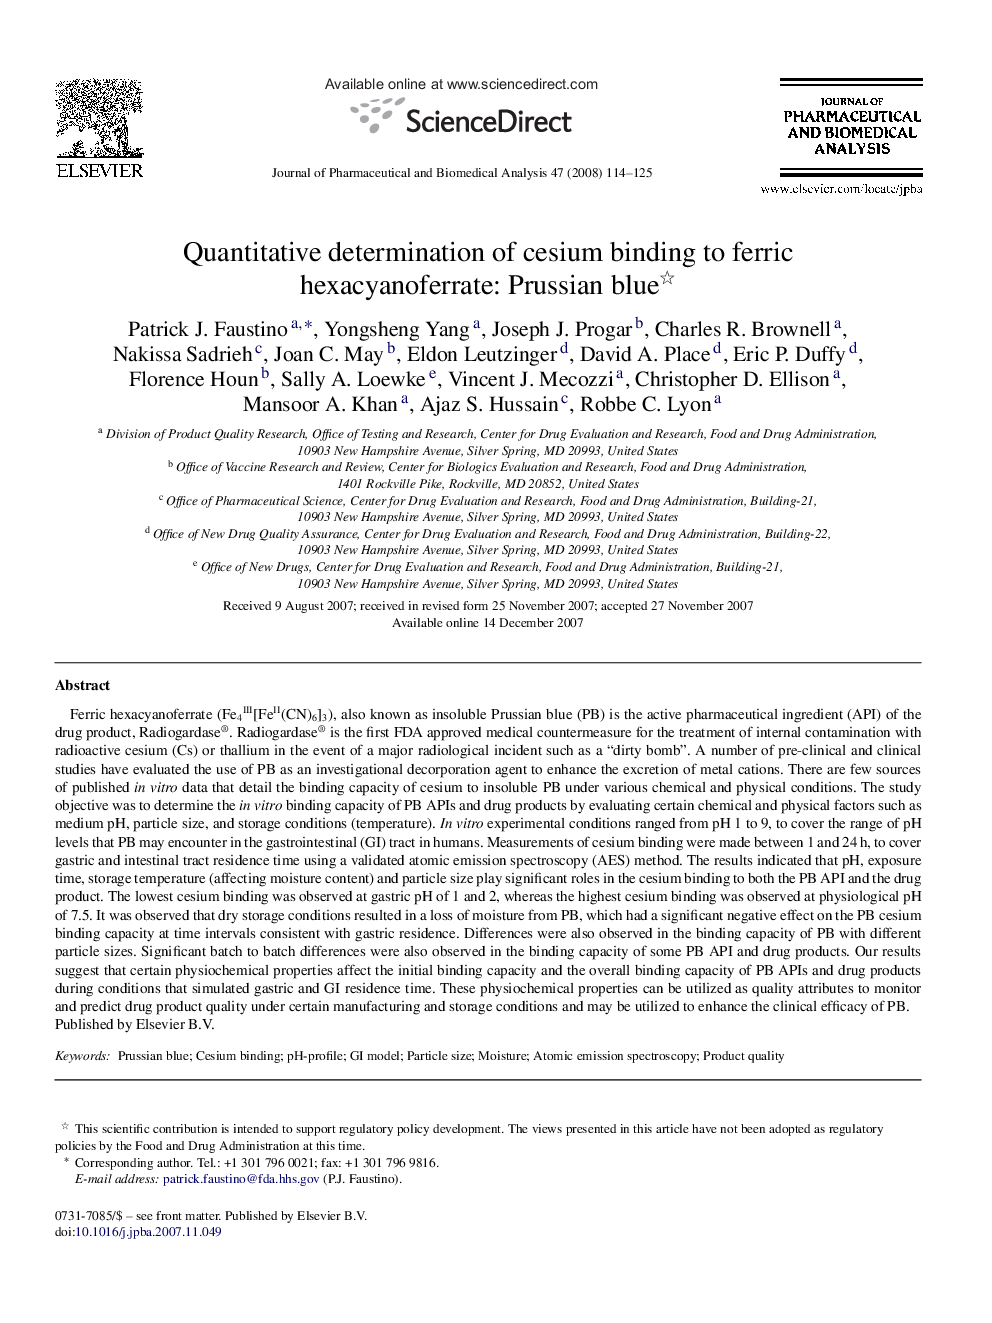 Quantitative determination of cesium binding to ferric hexacyanoferrate: Prussian blue 